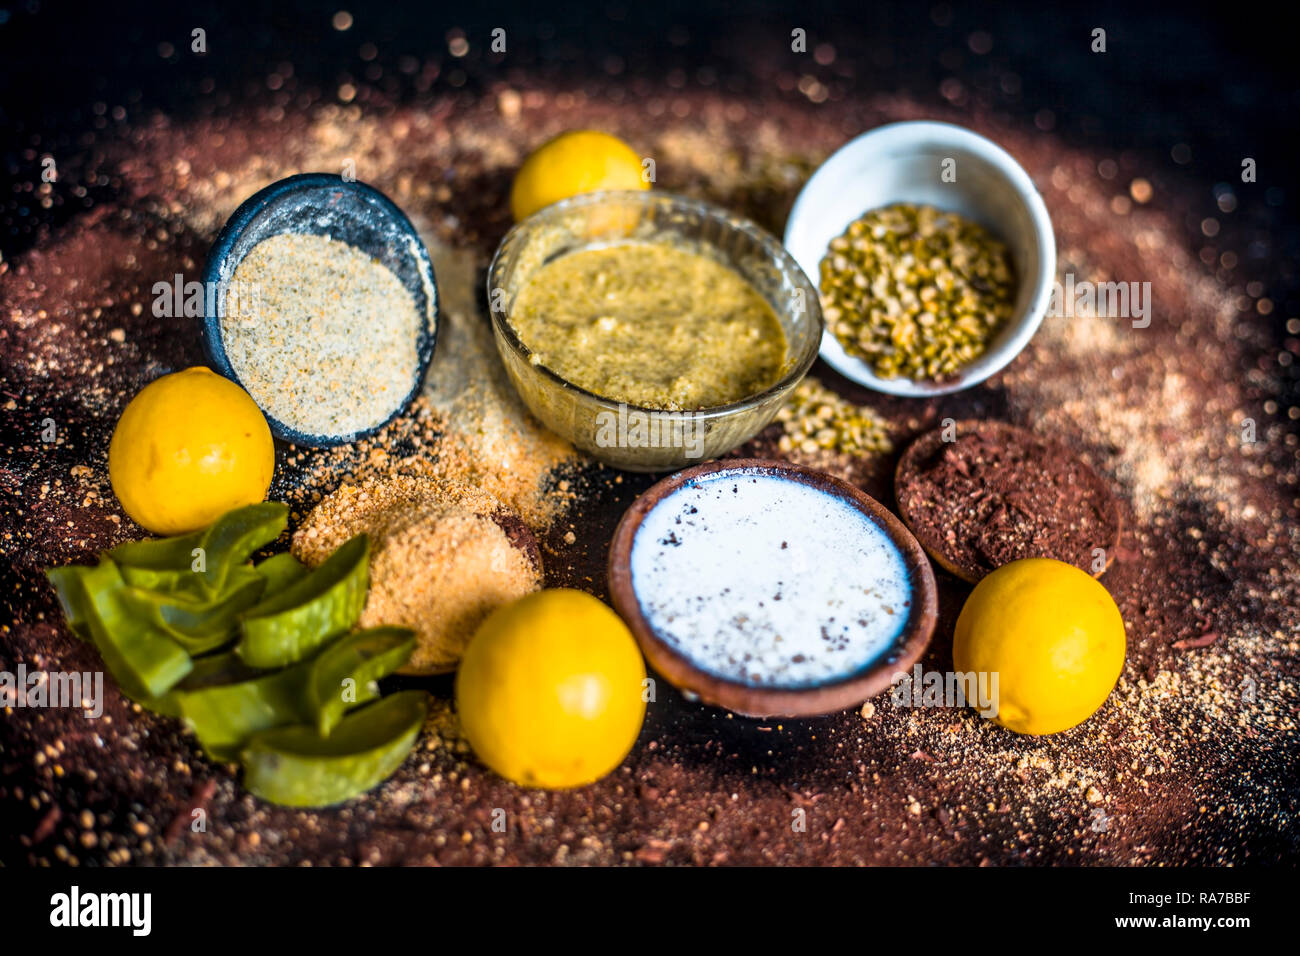 Ayurvedic face pack or ubtan of moong dal or green lentil or mung dal with lemon,dried orange peel powder,chandan powder or sandal wood powder,milk an Stock Photo